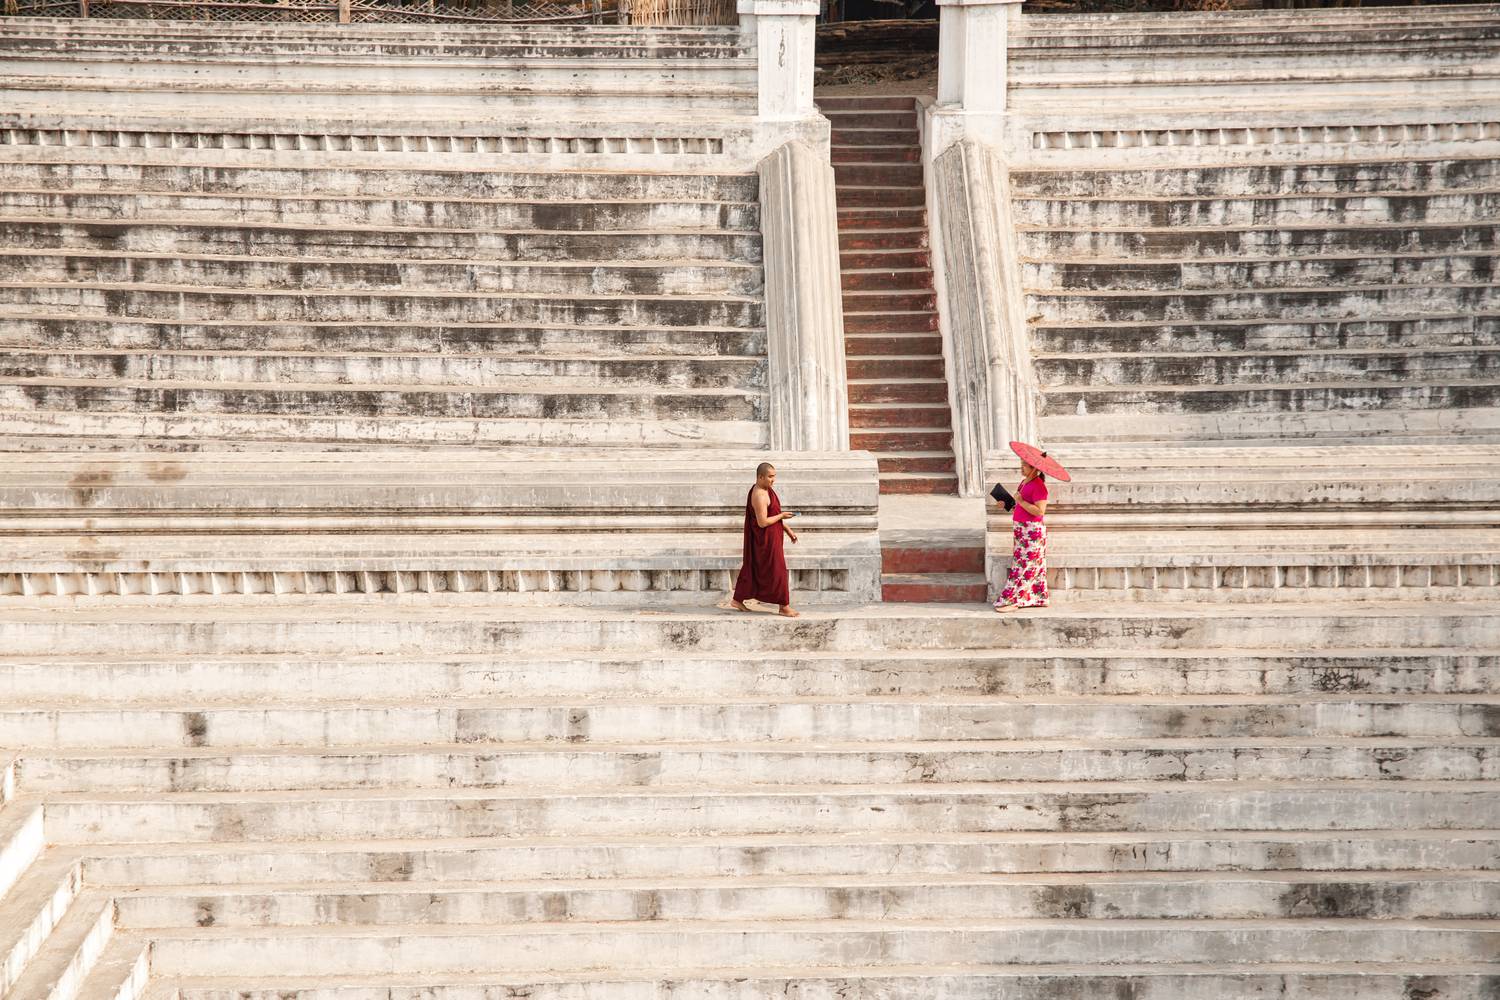 Tempel in Mandalay, Myanmar (Burma) von Miro May